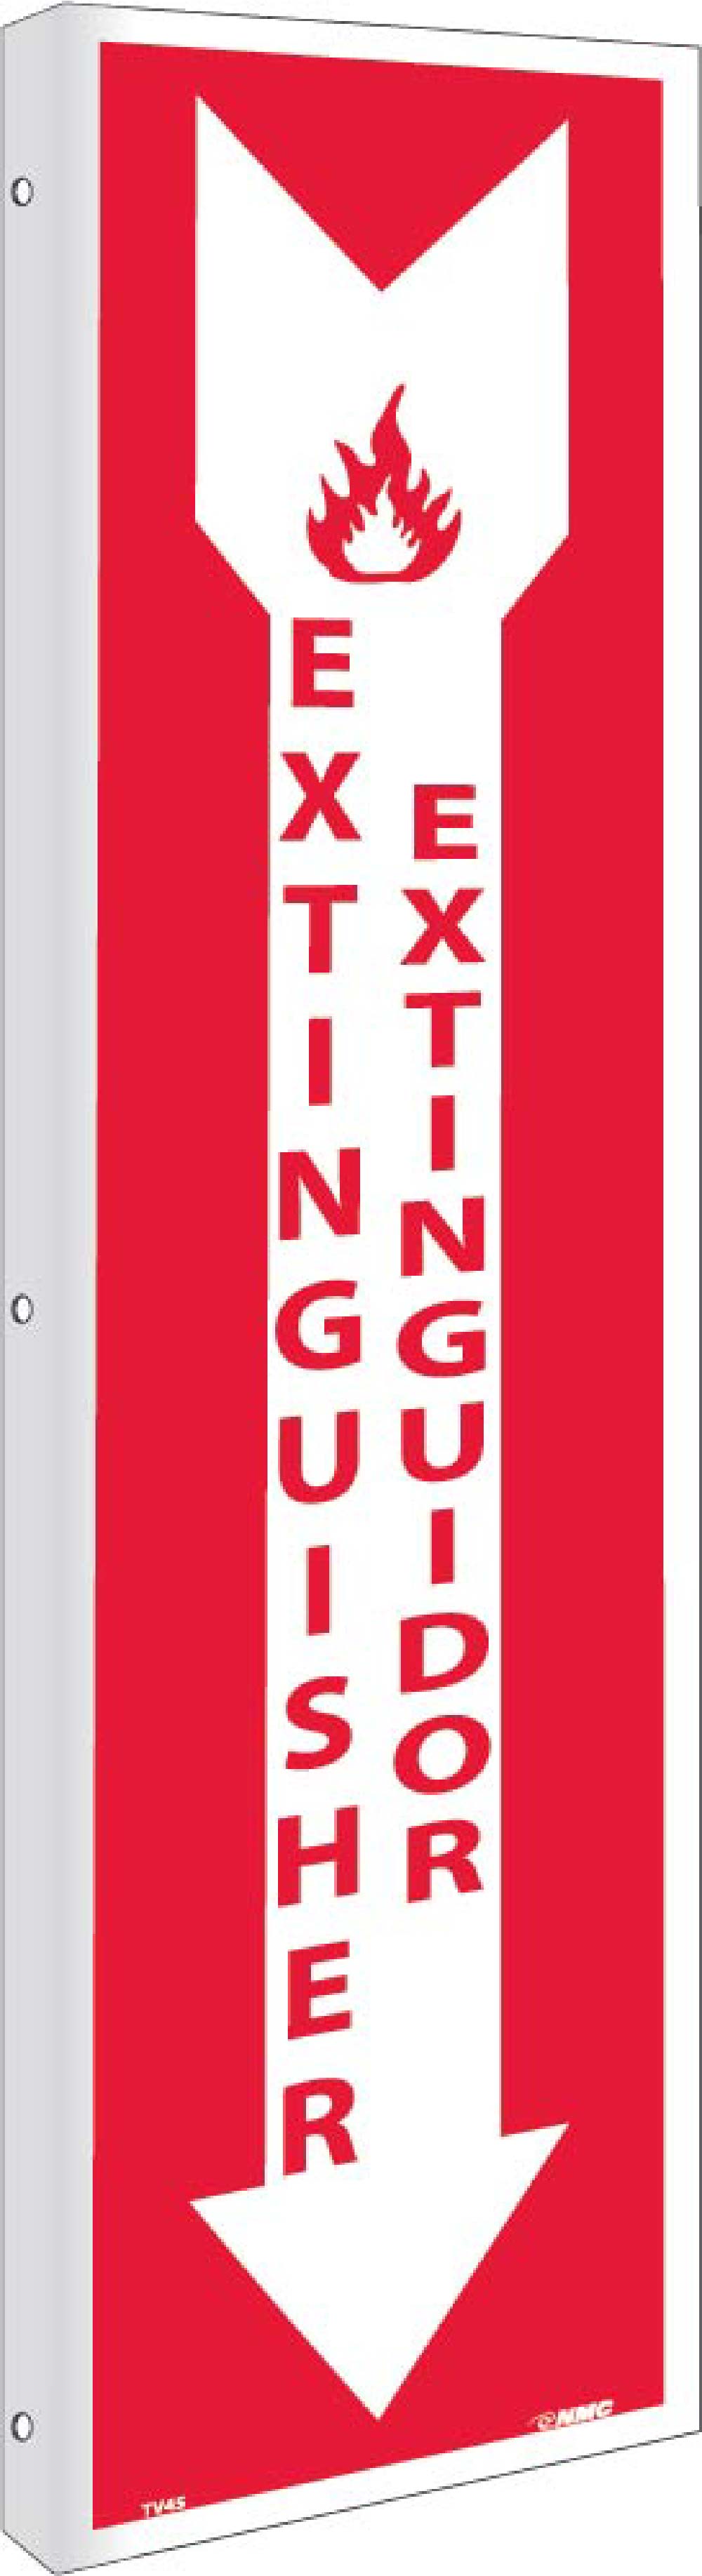 Extinguisher Sign - Bilingual-eSafety Supplies, Inc